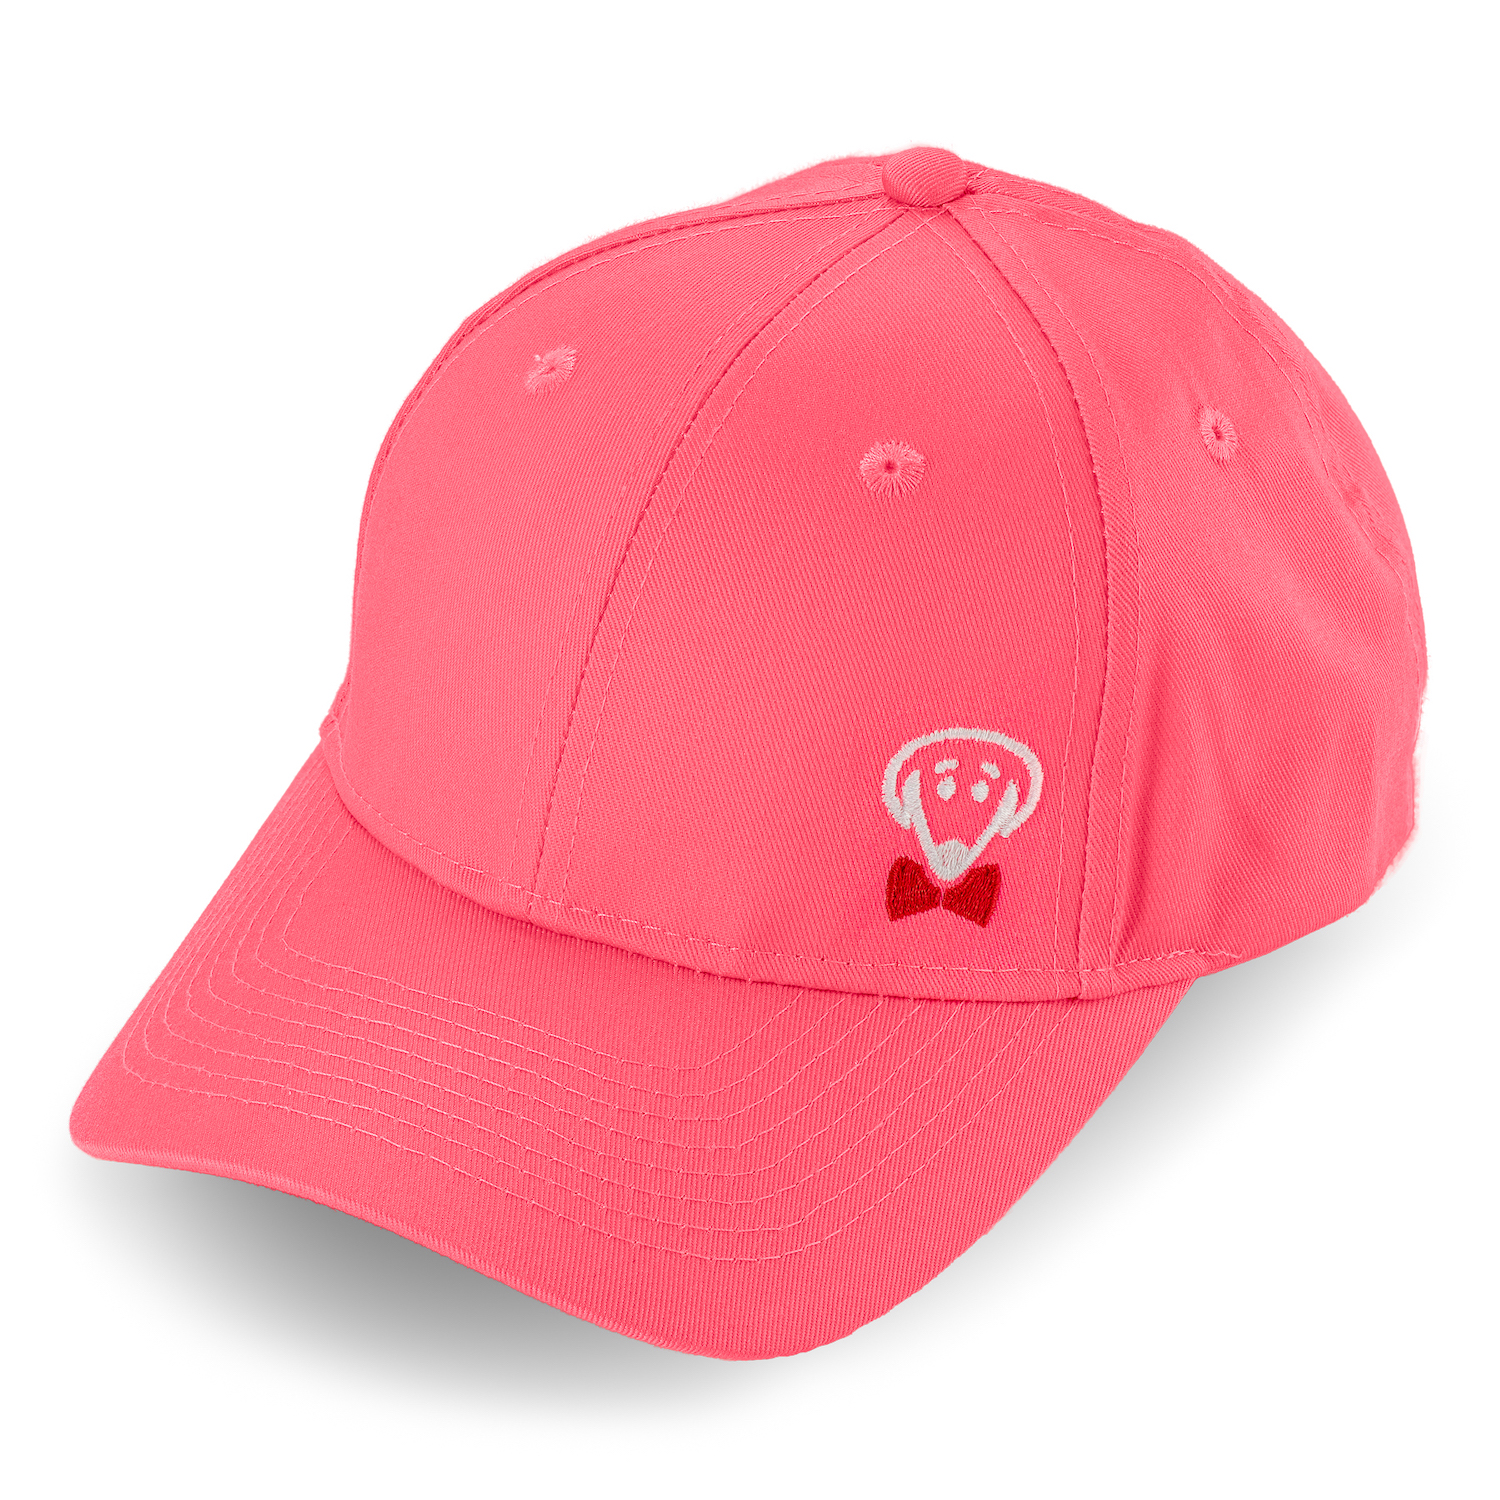 Beau Tyler - Austin hat pink front